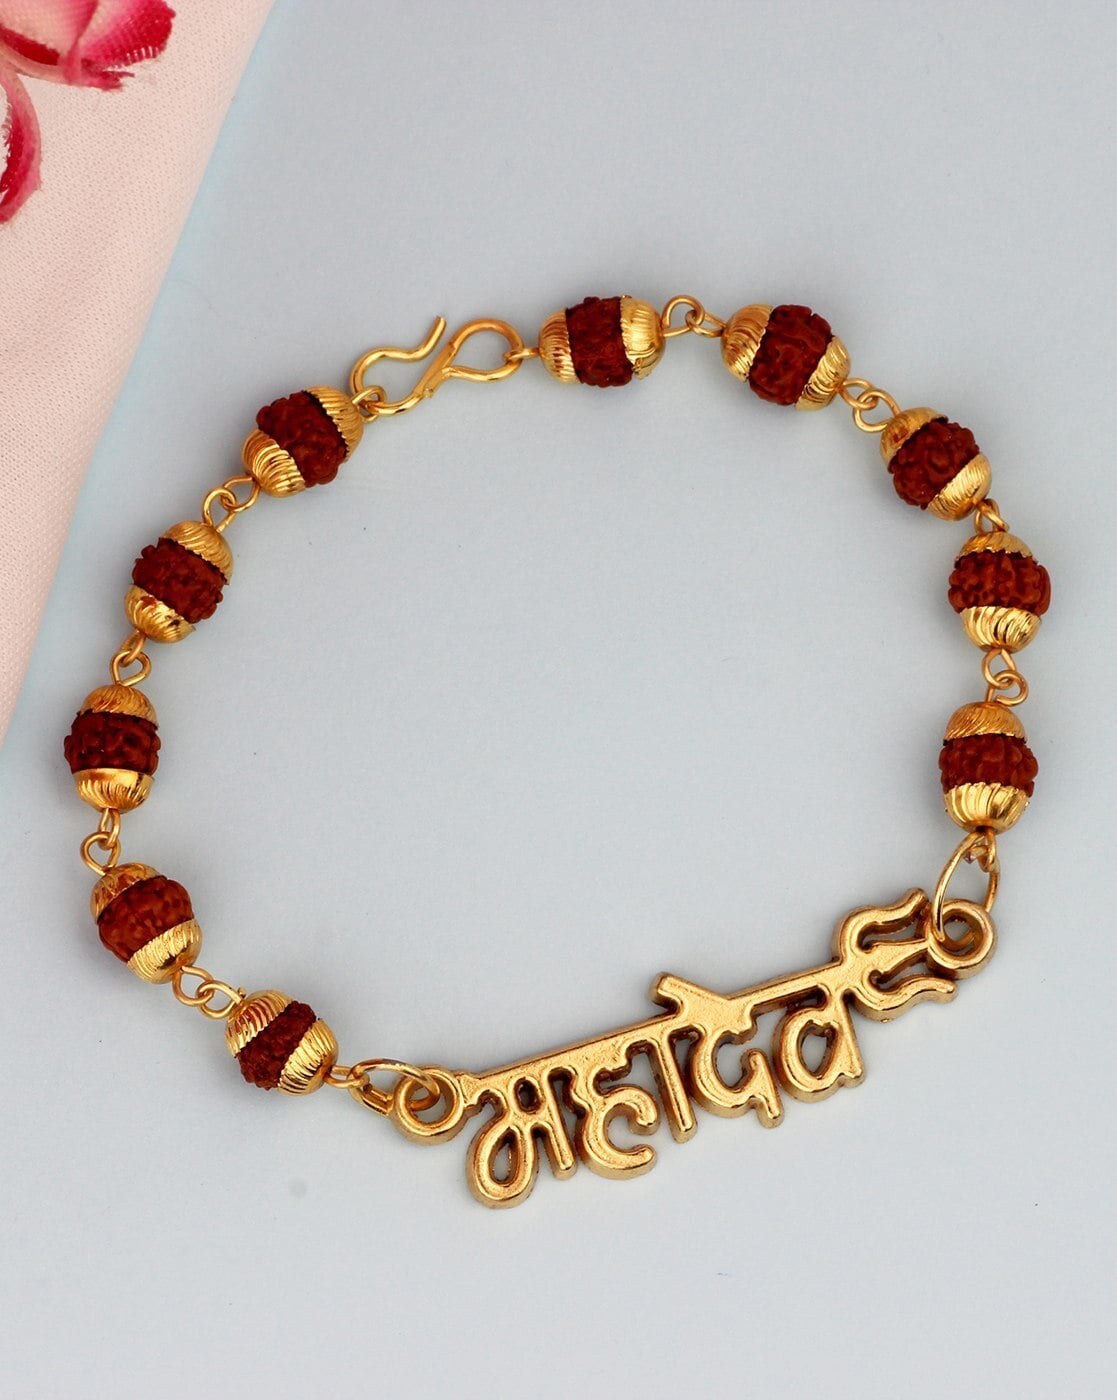 Buy Mahadev Bracelet With Golden Engravings Gift Online at ₹349